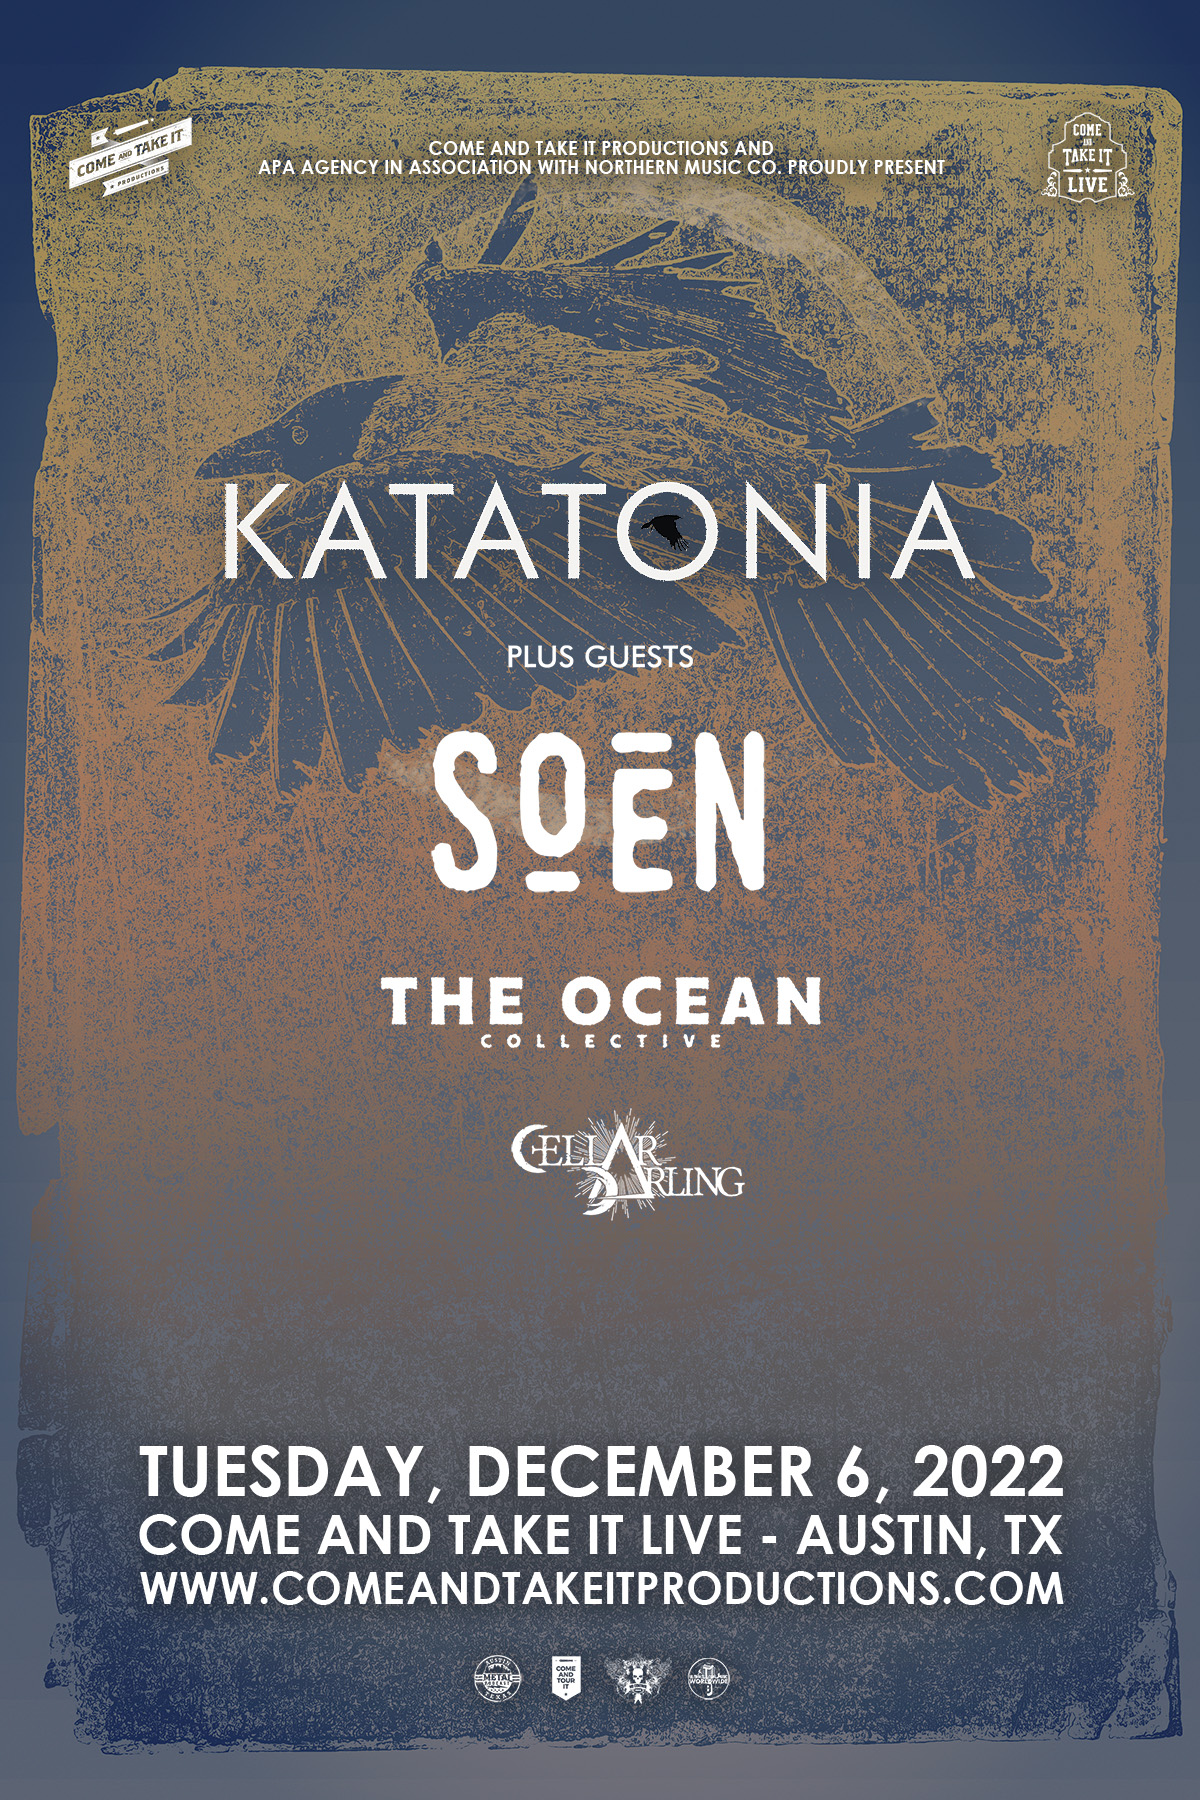 Katatonia, Soen, The Ocean Collective, and Cellar Darling